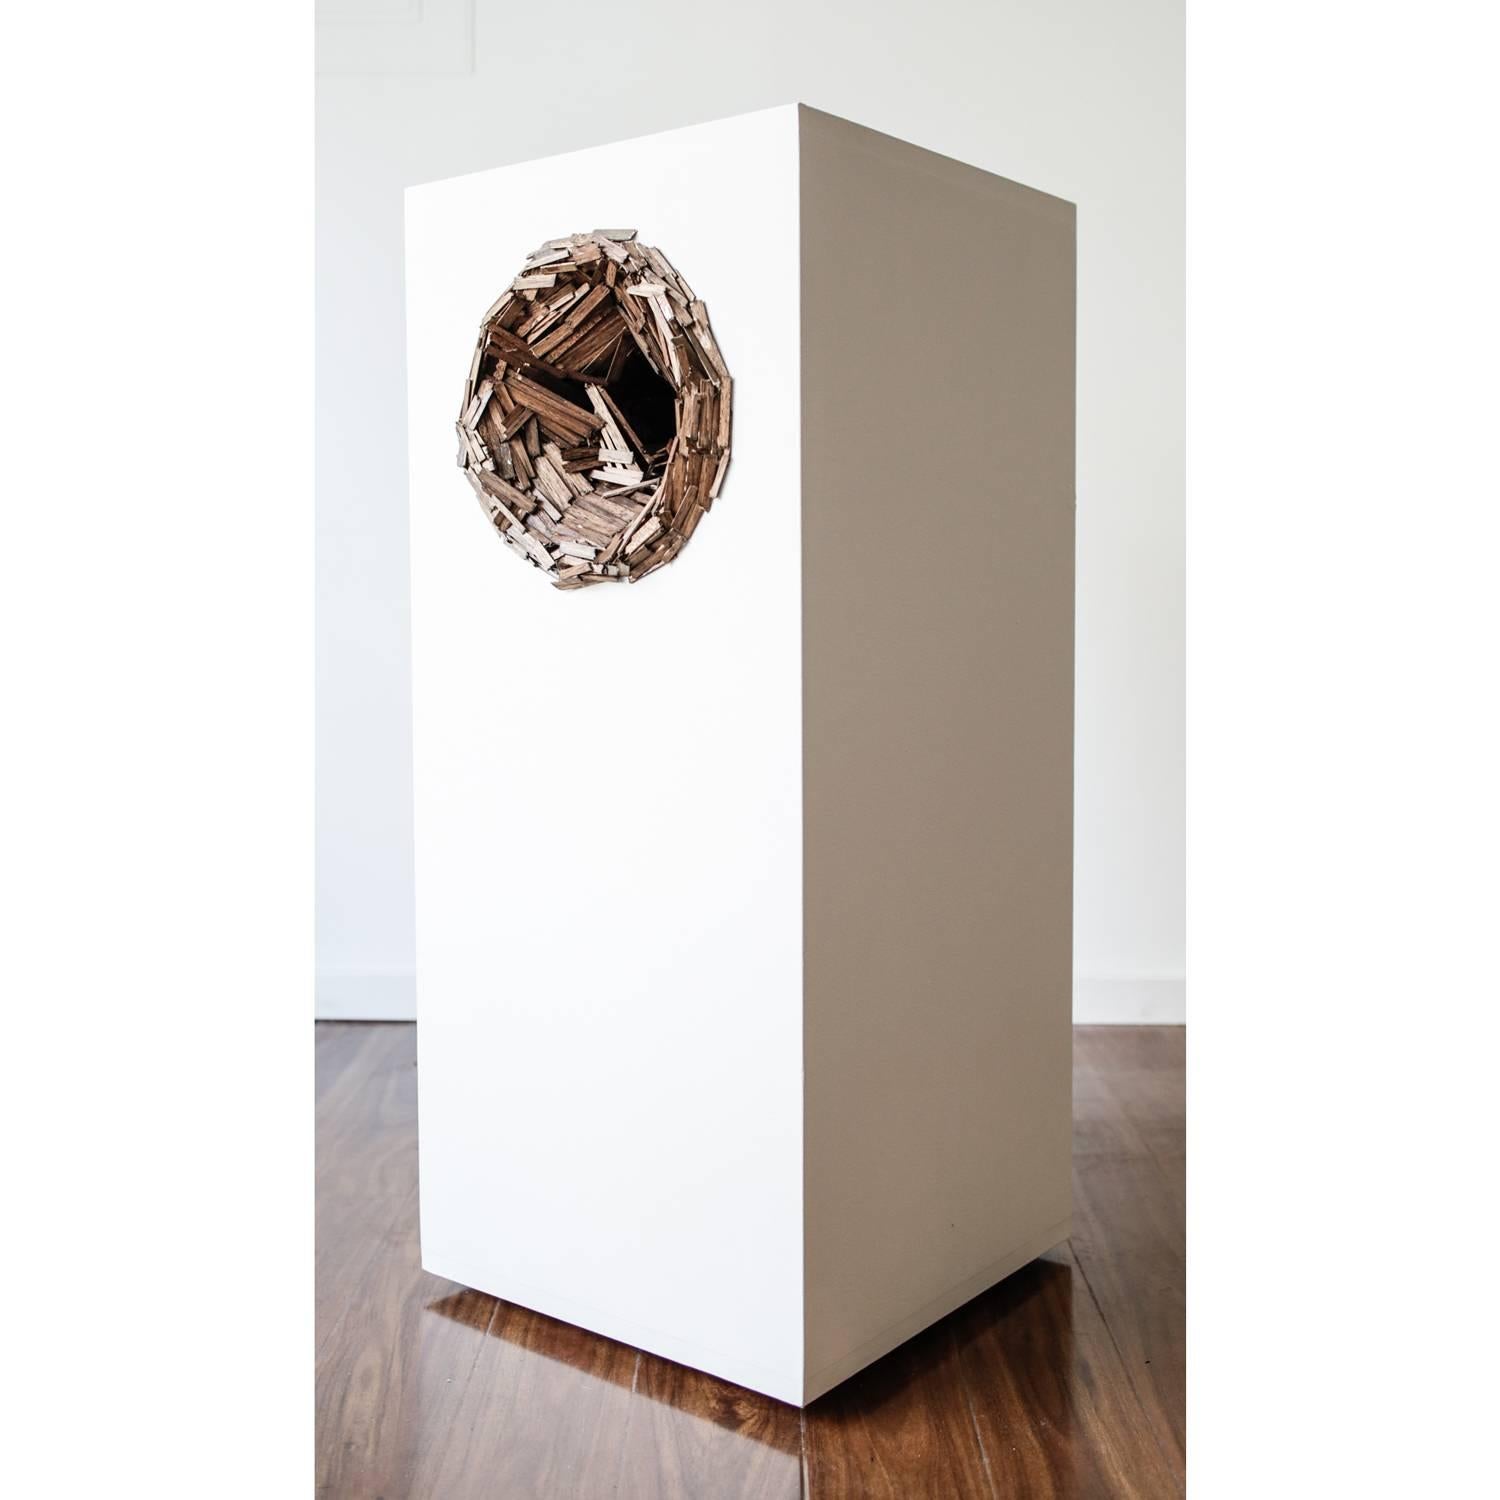 Seth Clark Abstract Sculpture - Pedestal Study IV